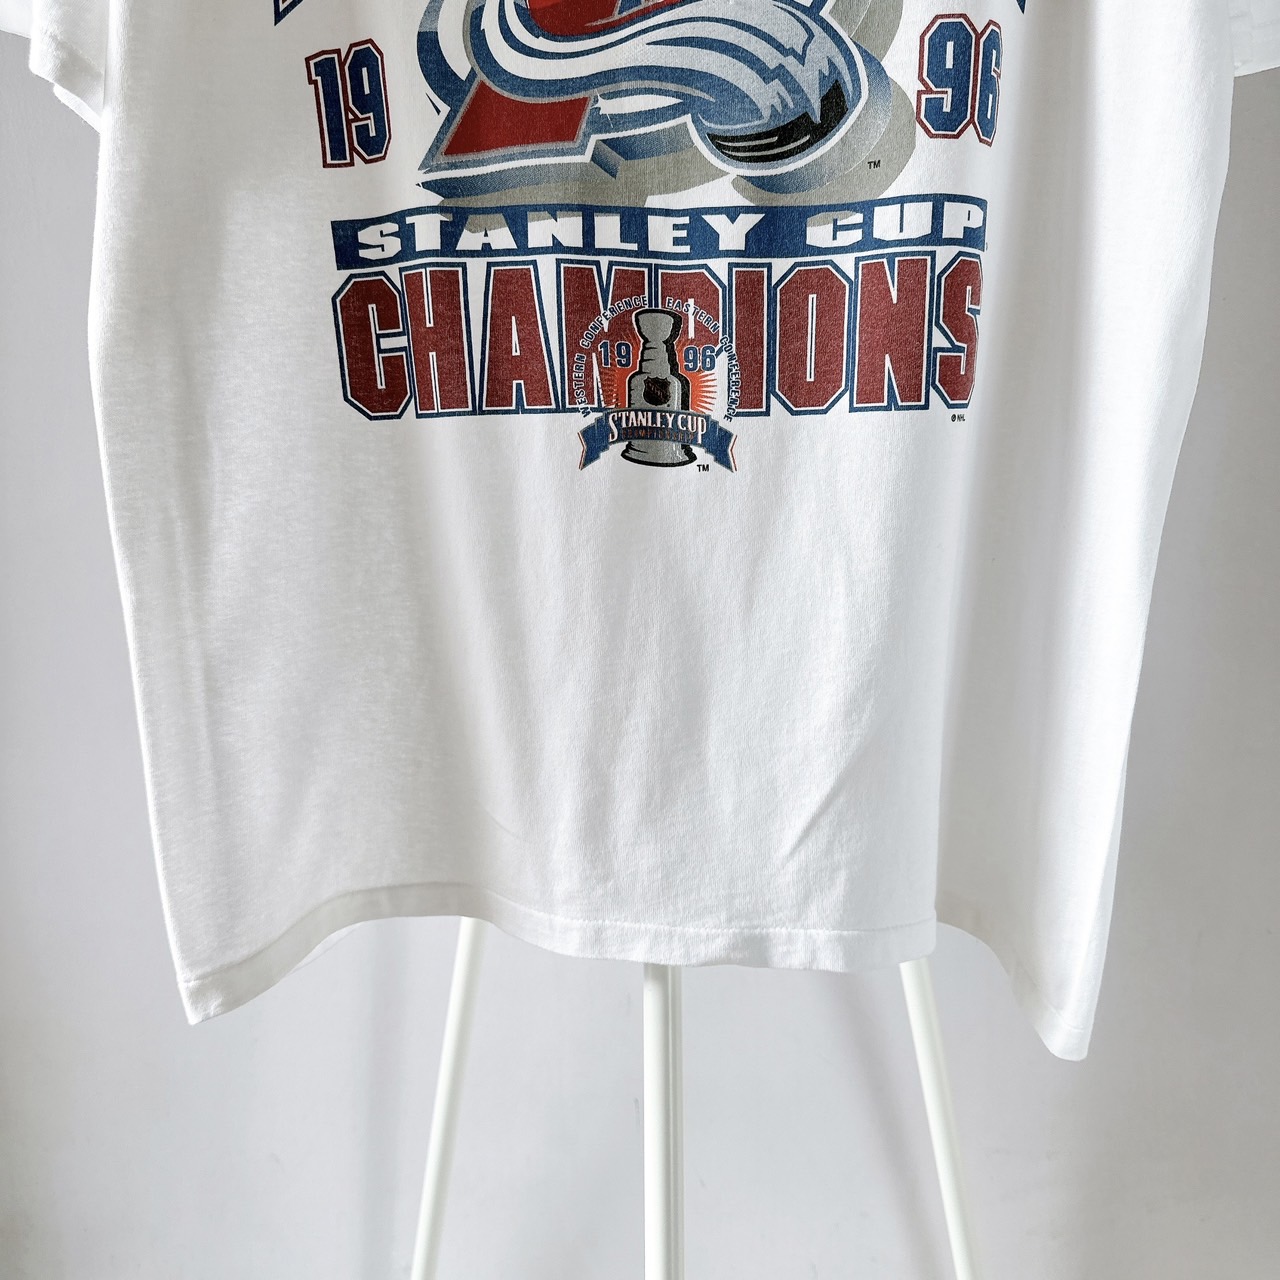 Vintage NHL Colorado Avalanche Logo Sweatshirt - Teeholly